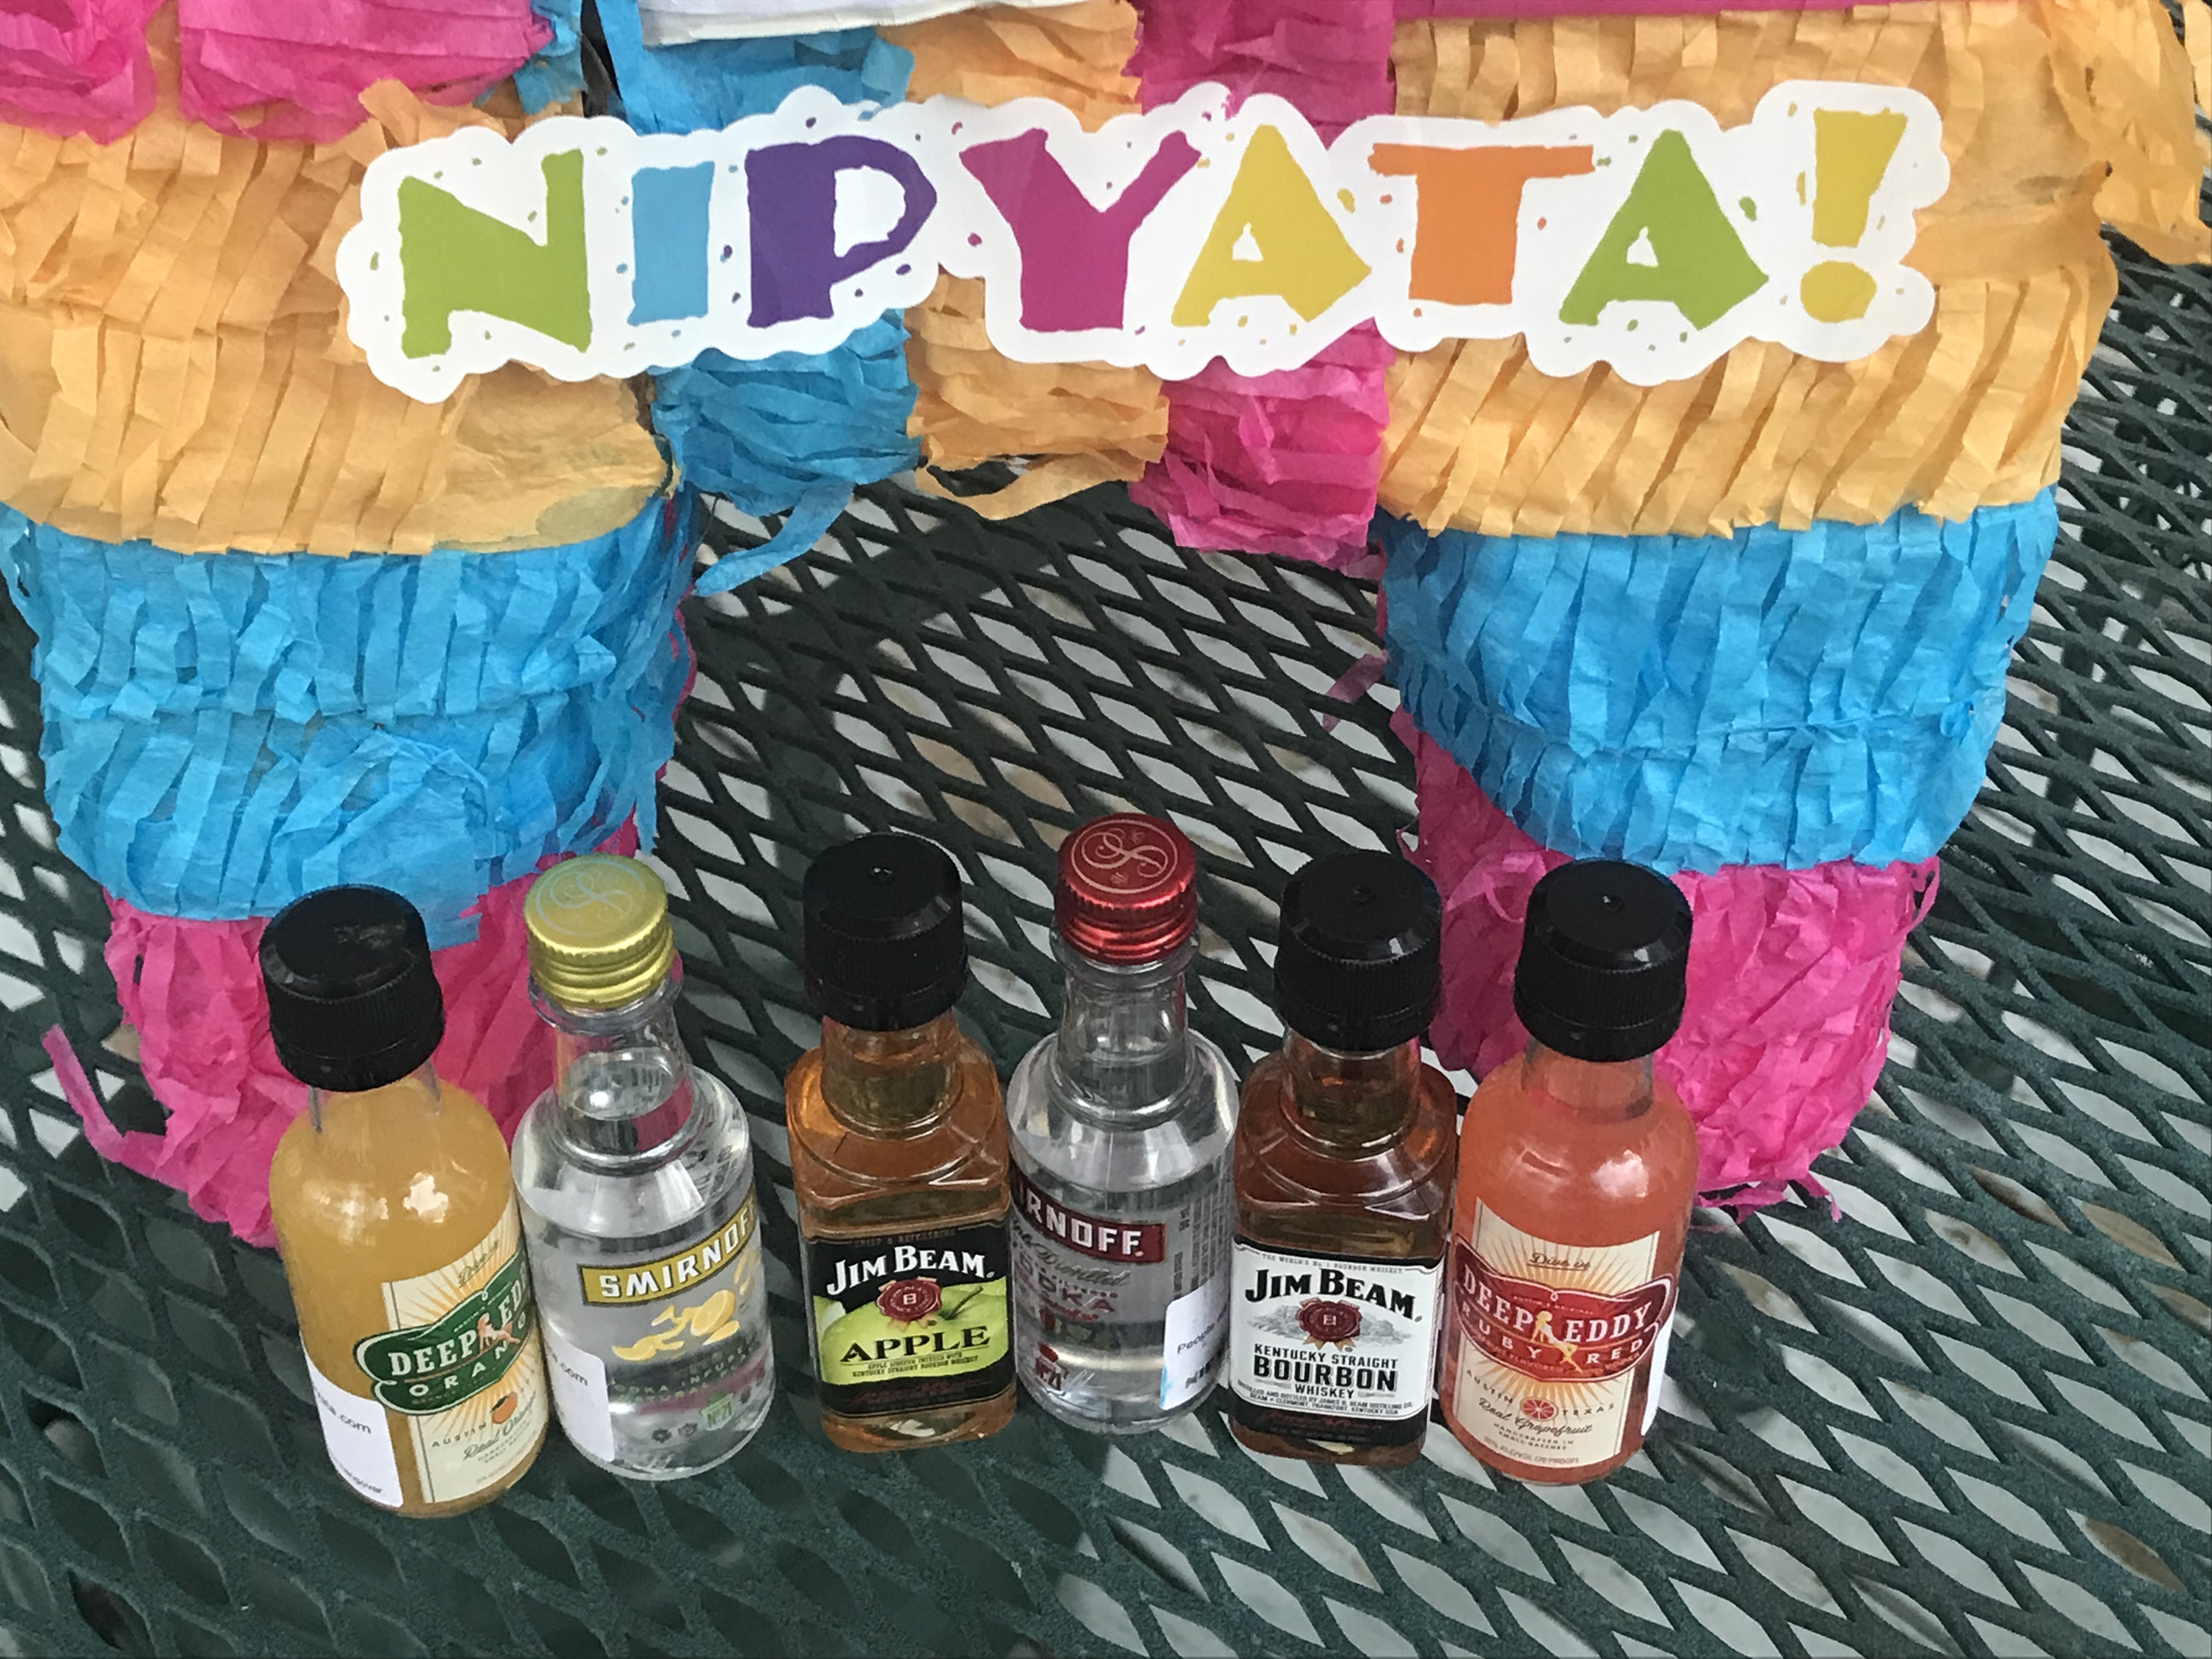 A New Birthday Tradition, The Nipyata!